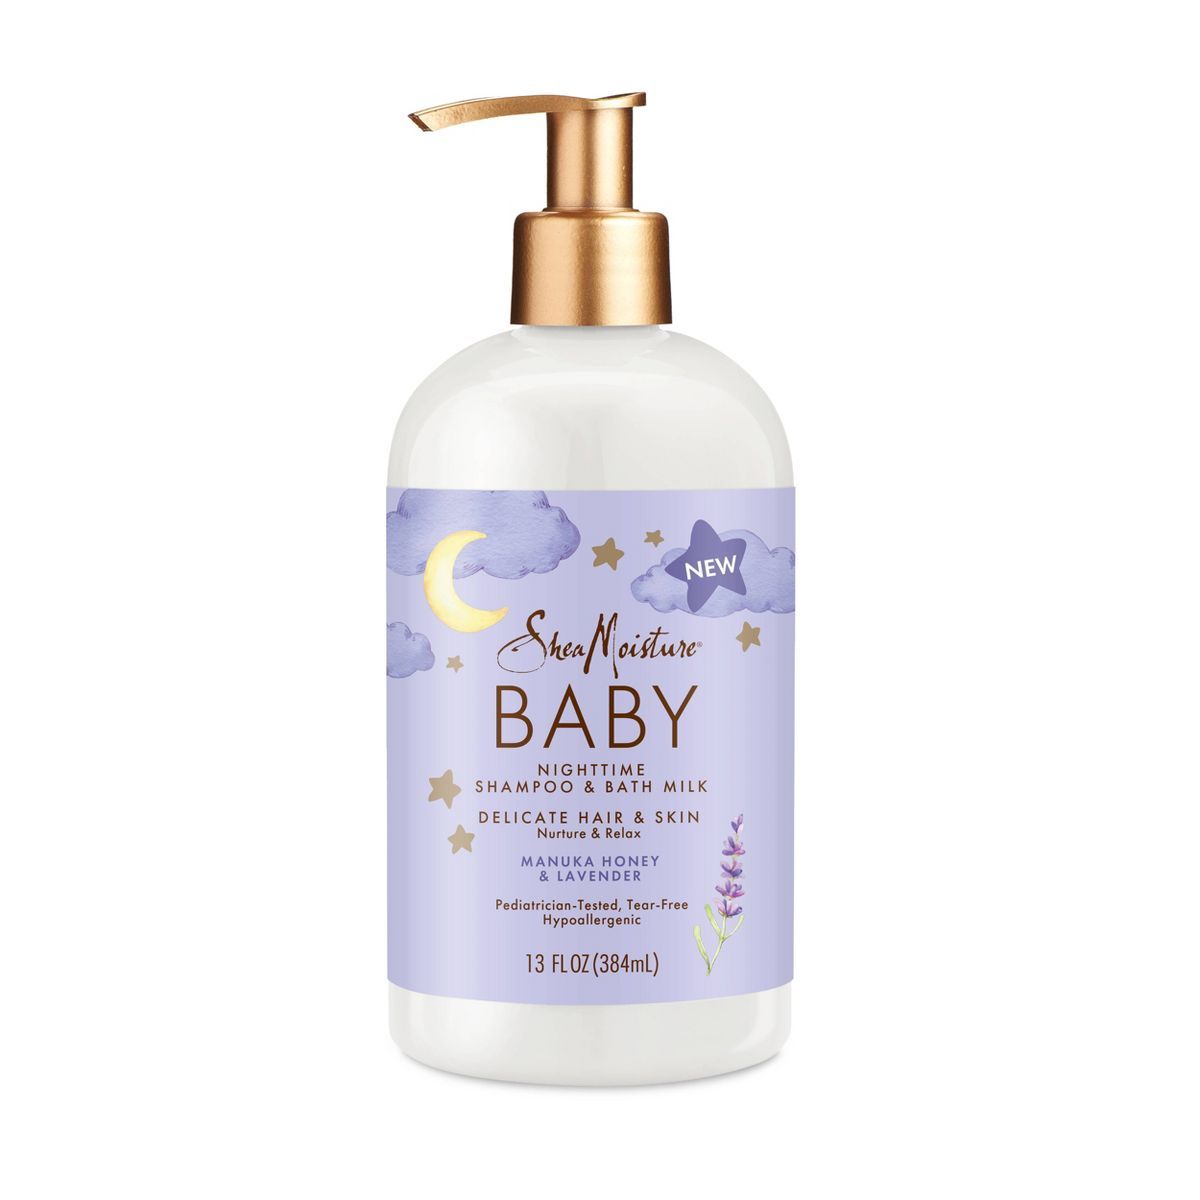 SheaMoisture Baby Manuka Honey & Lavender Pump Nighttime Shampoo & Bath Milk for Delicate Hair & ... | Target